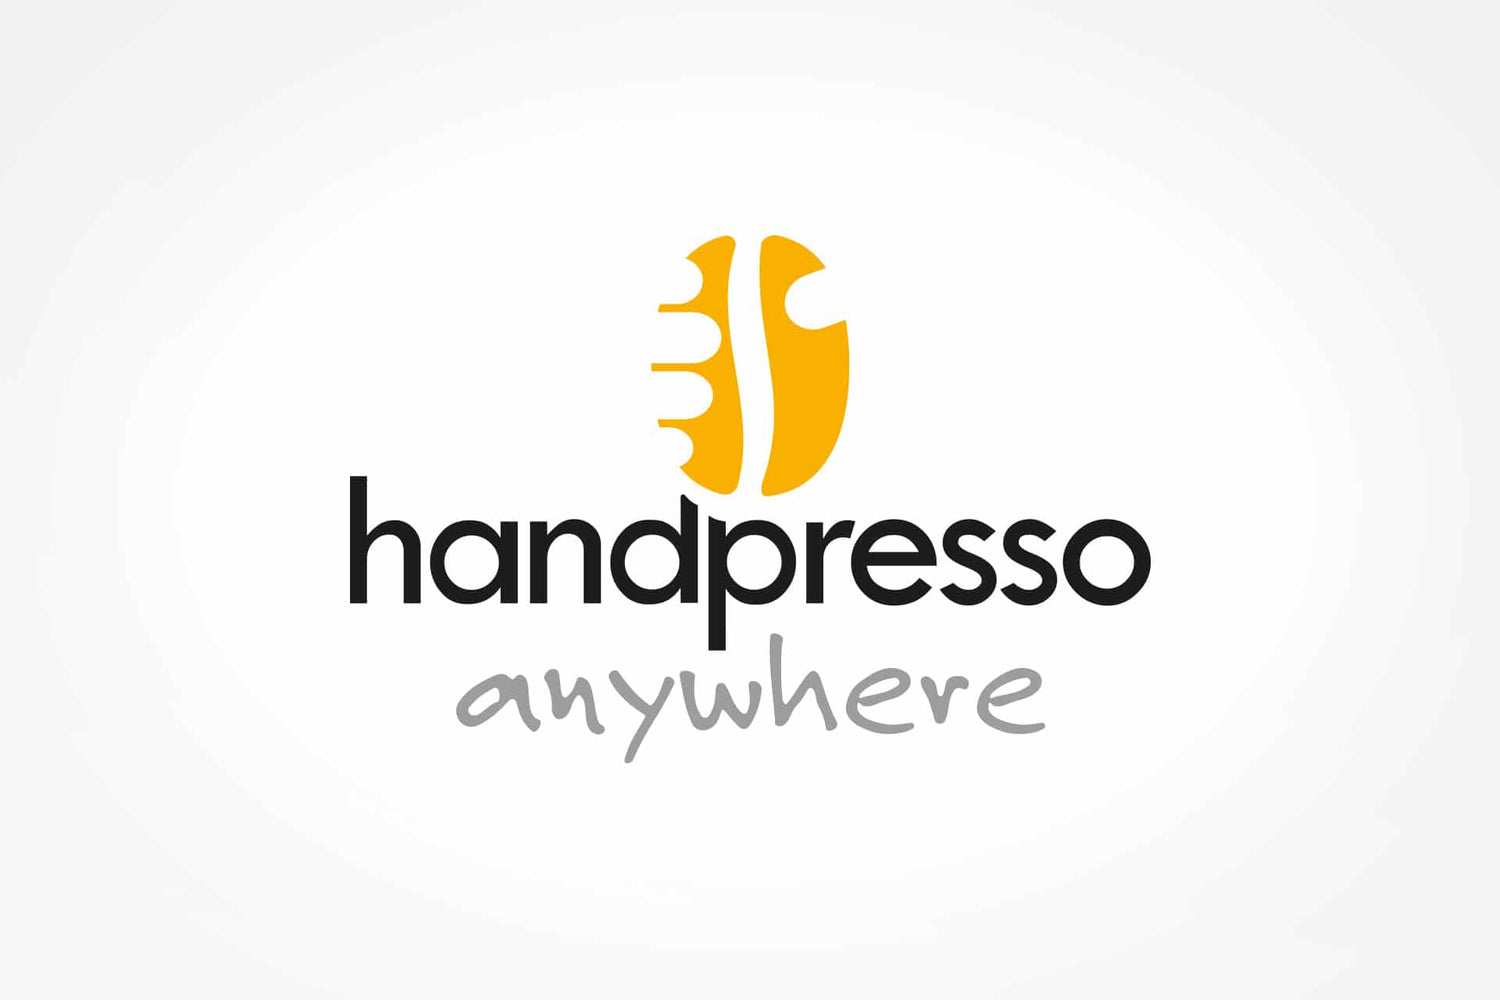 Handspresso